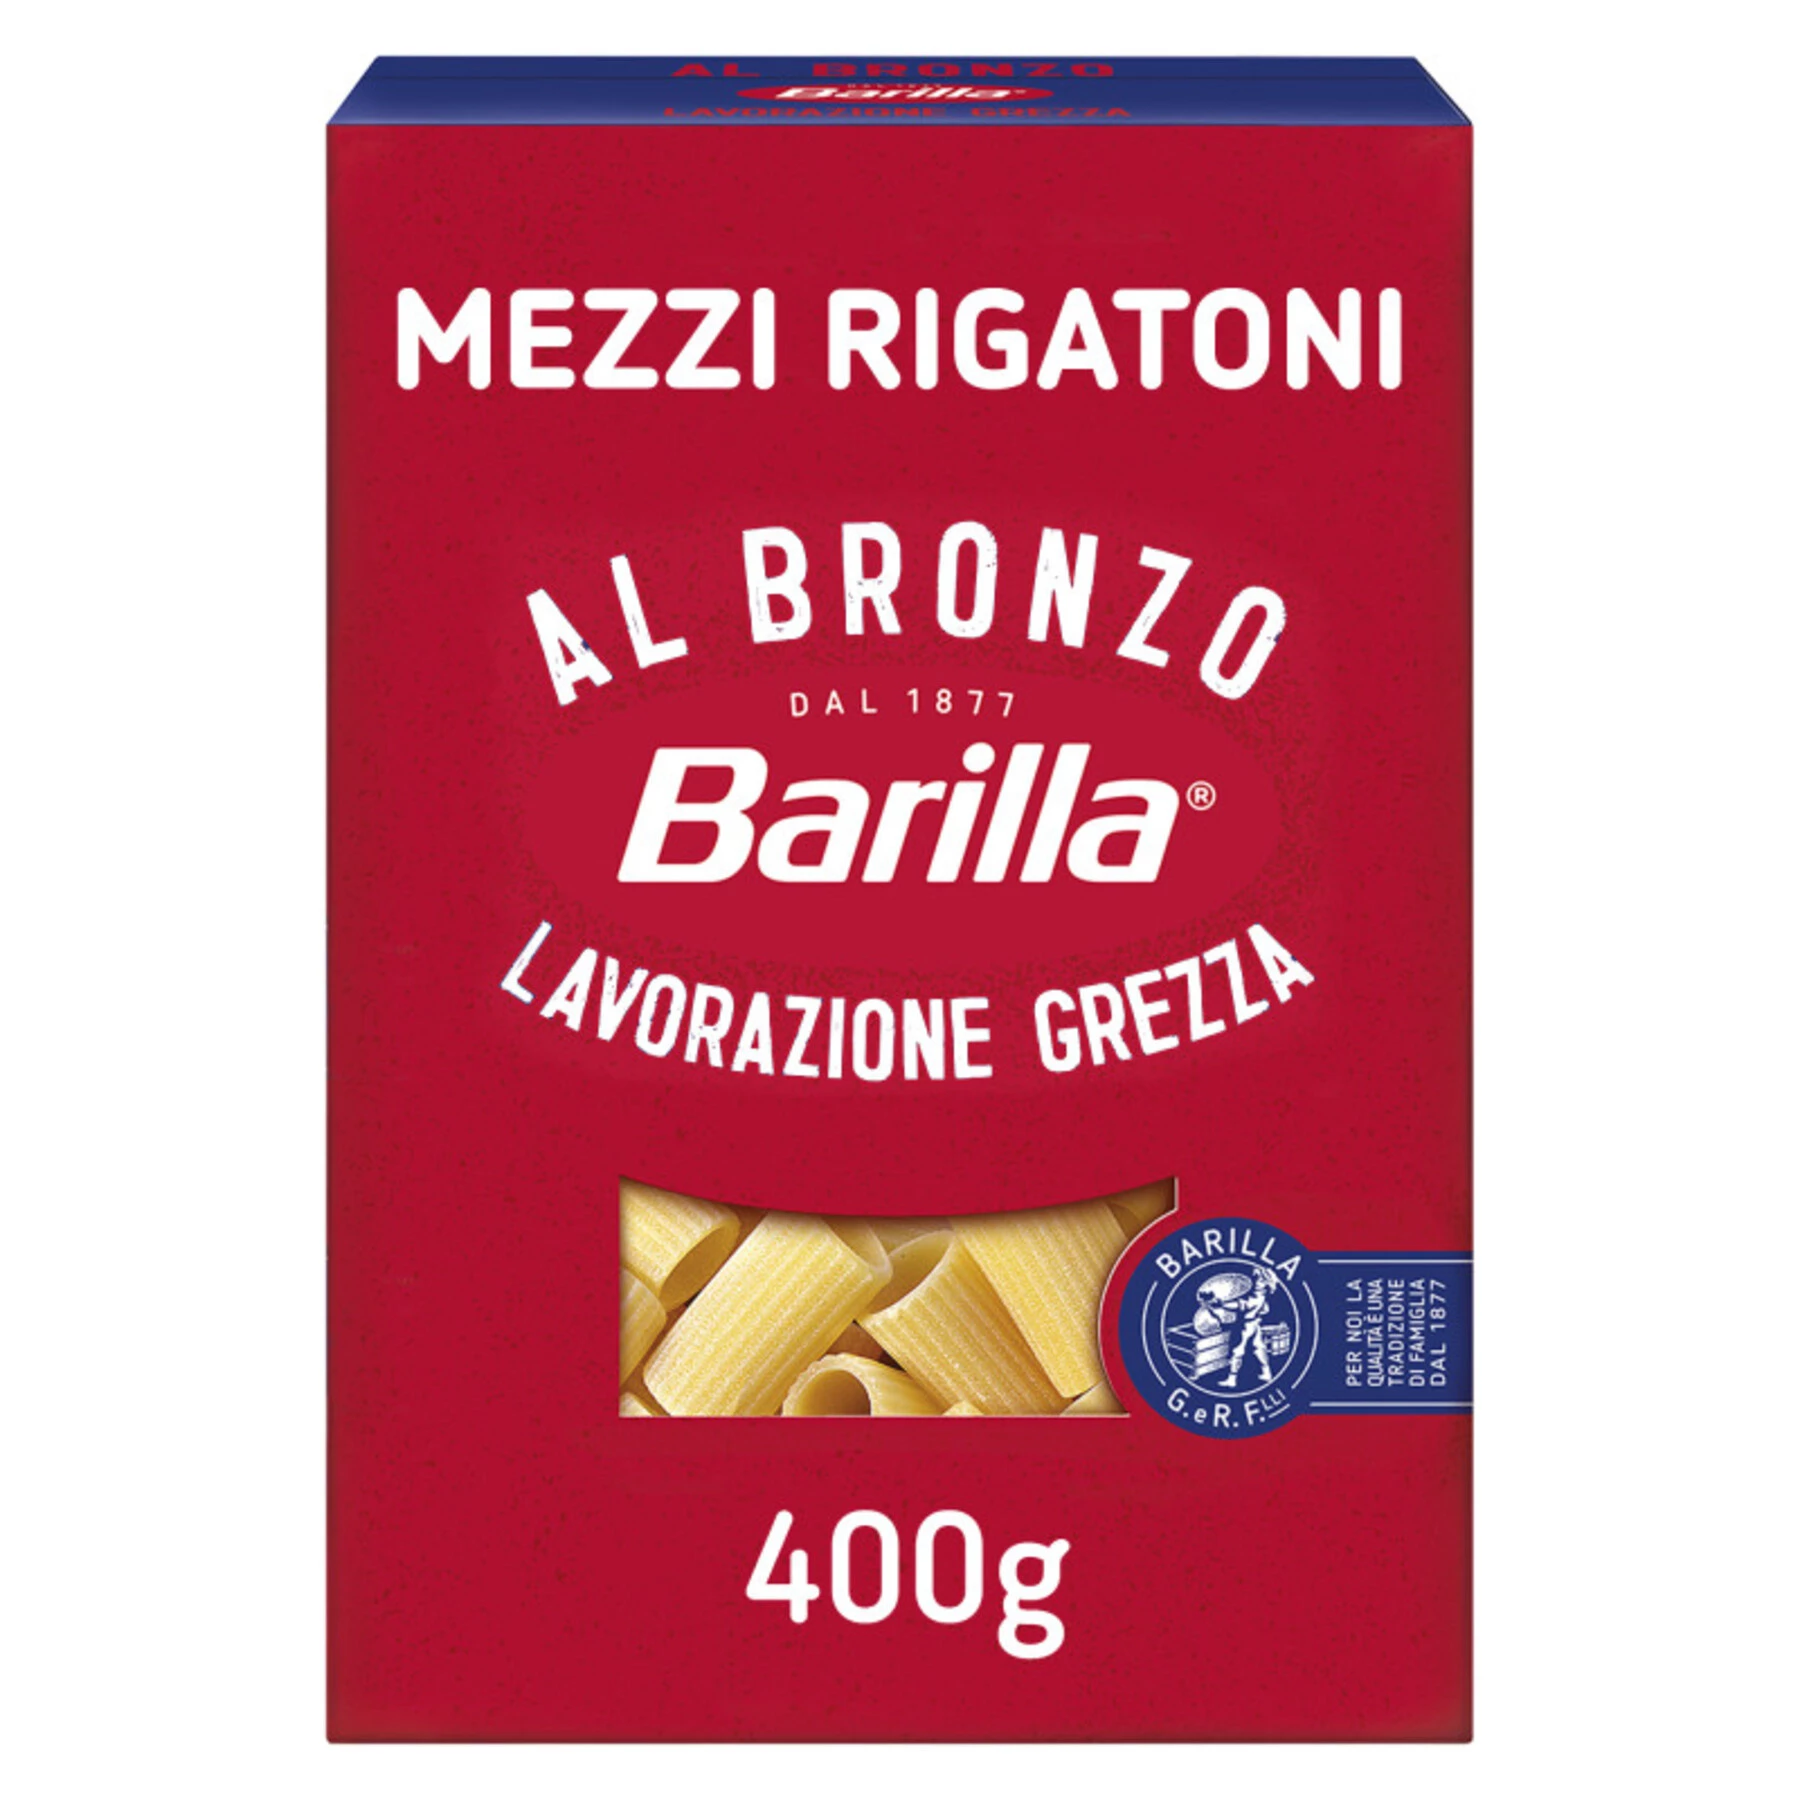 Bronzen Pates Mezzi Rigatoni, 400g - BARILLA